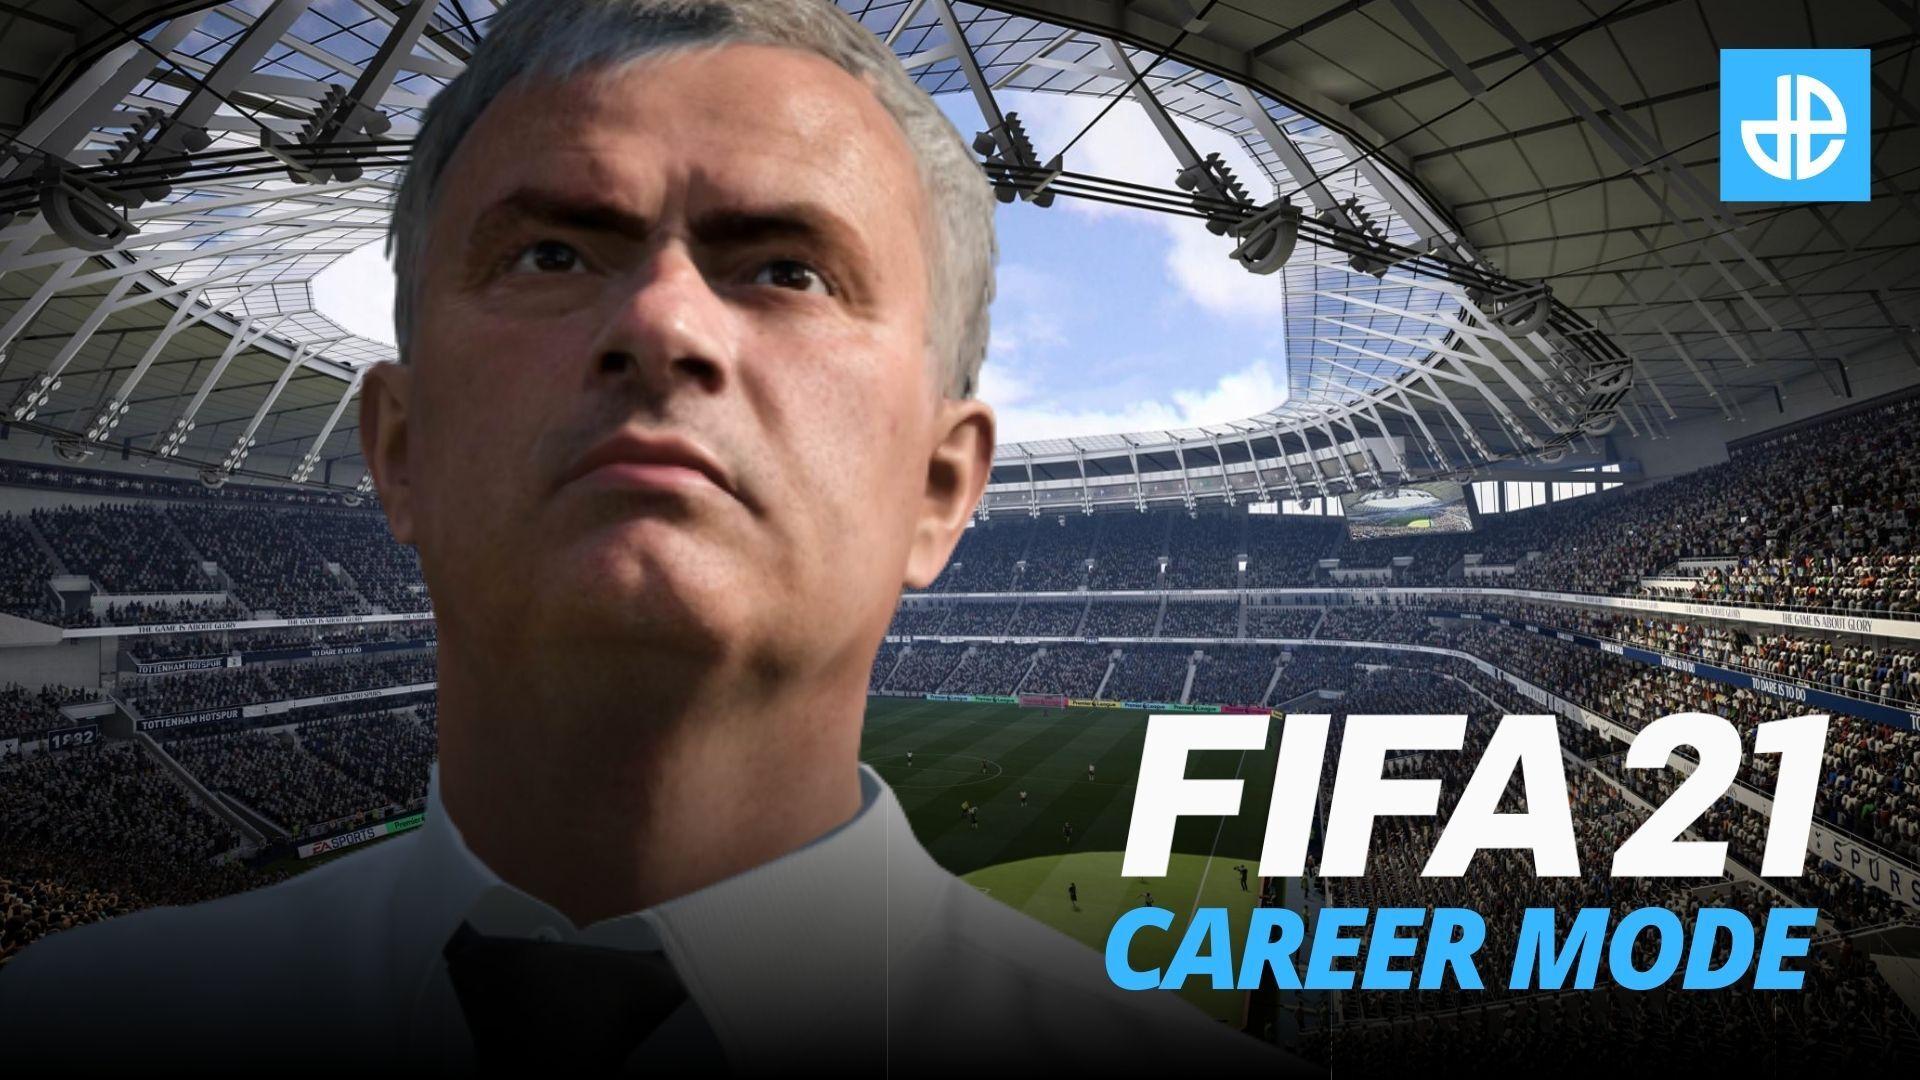 Mourinho on FIFA 21 Background